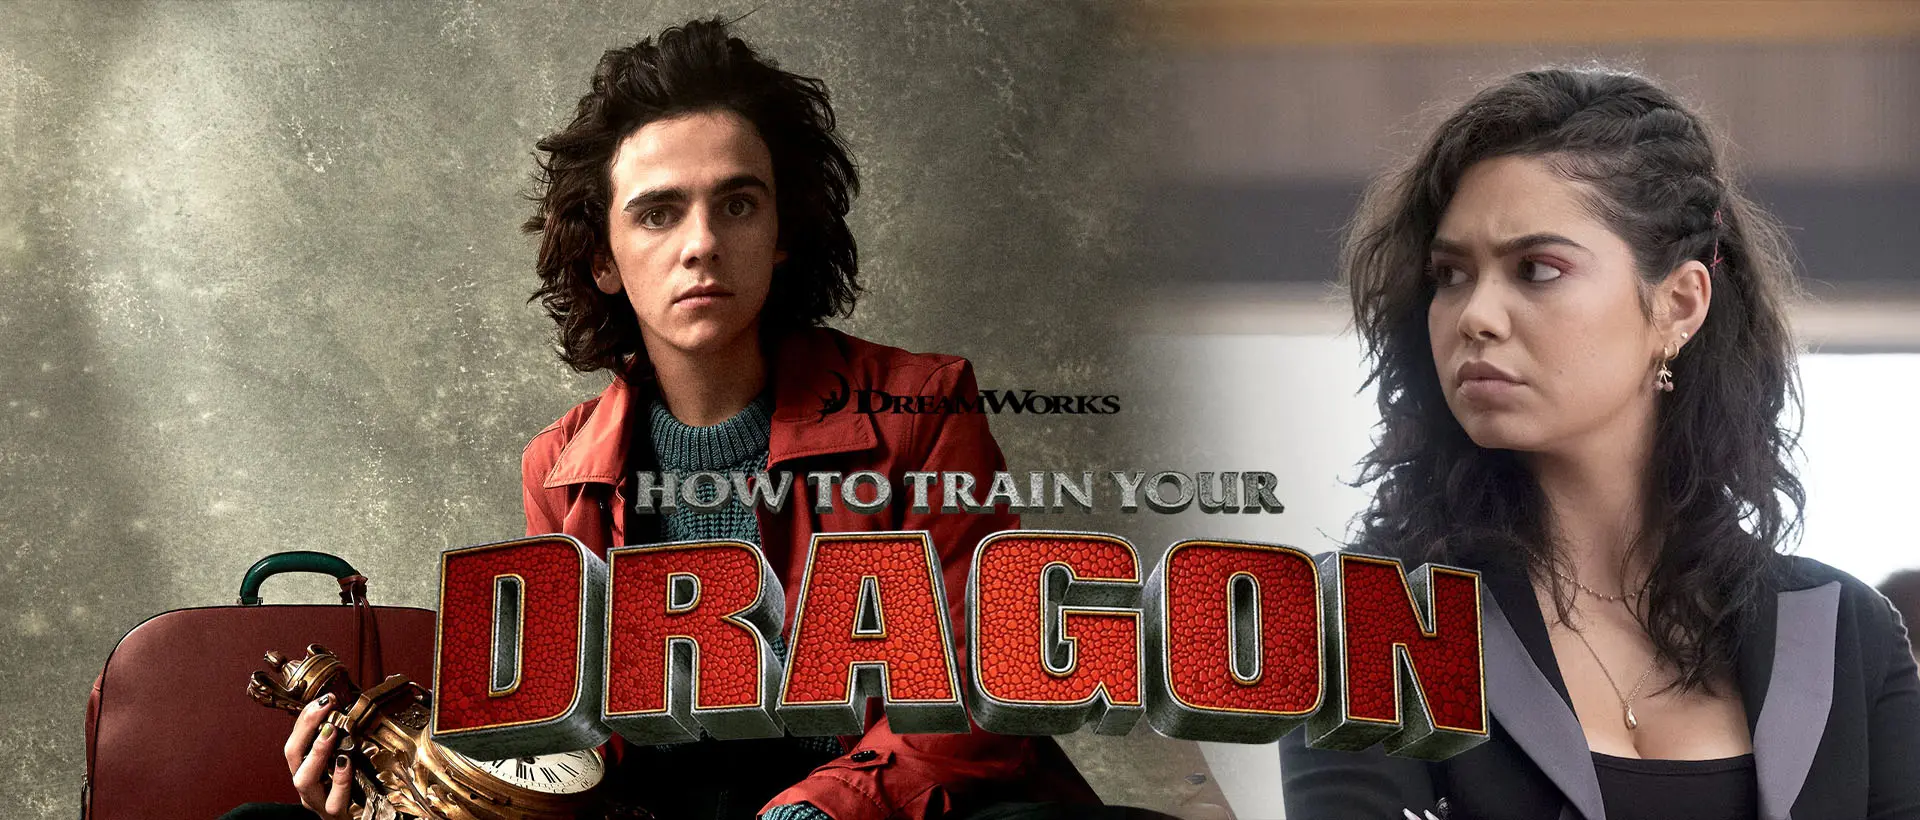 grazer cravalho how to train your dragon banner